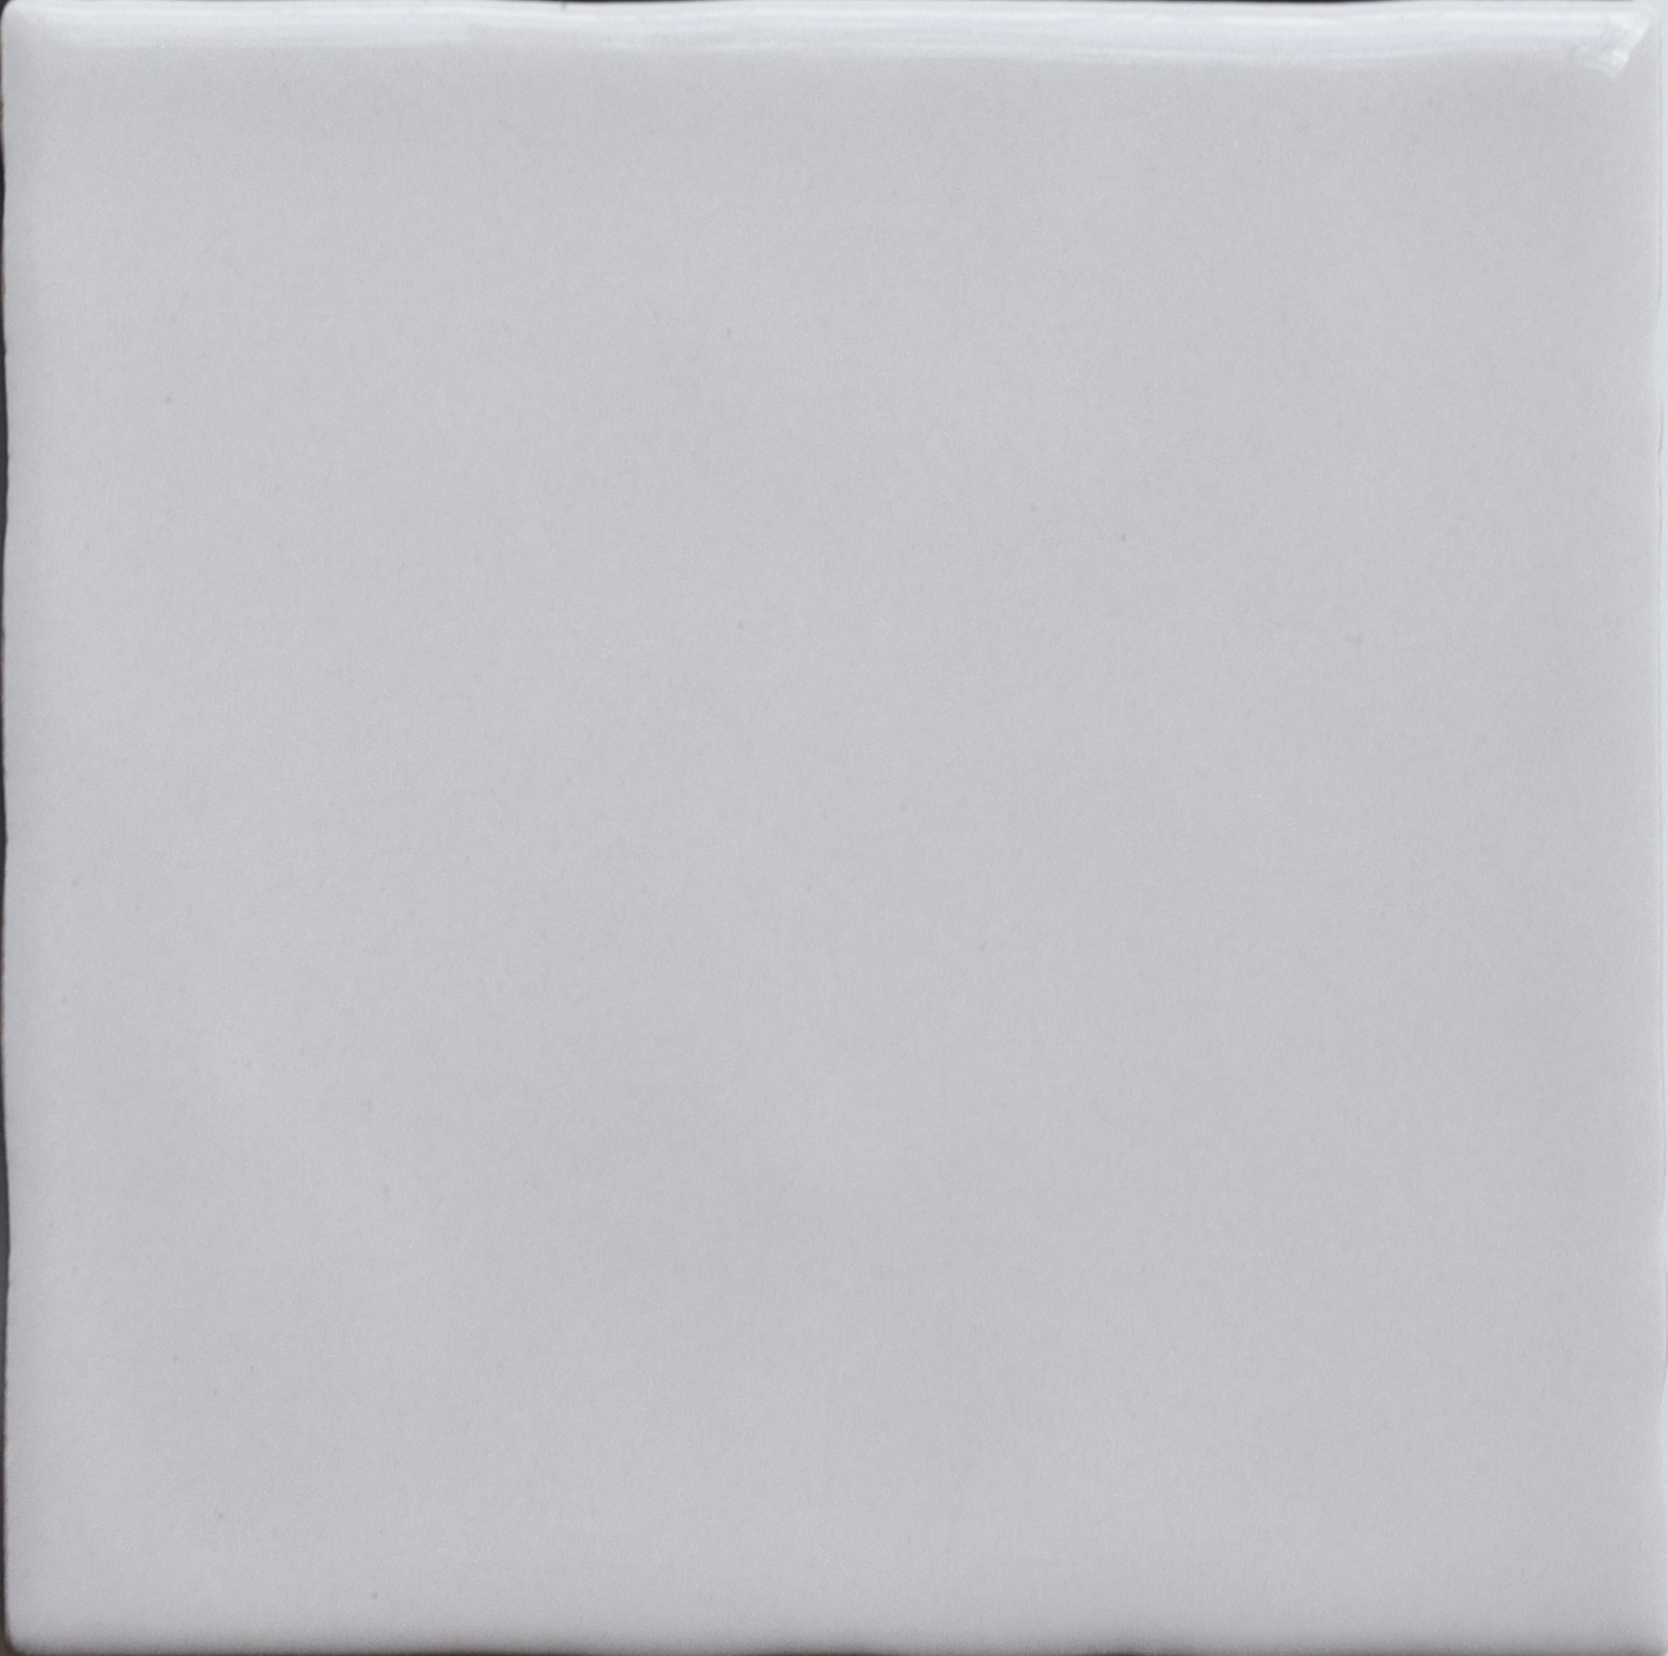 100x100mm waved edge glossy surface backsplash kitchen tile